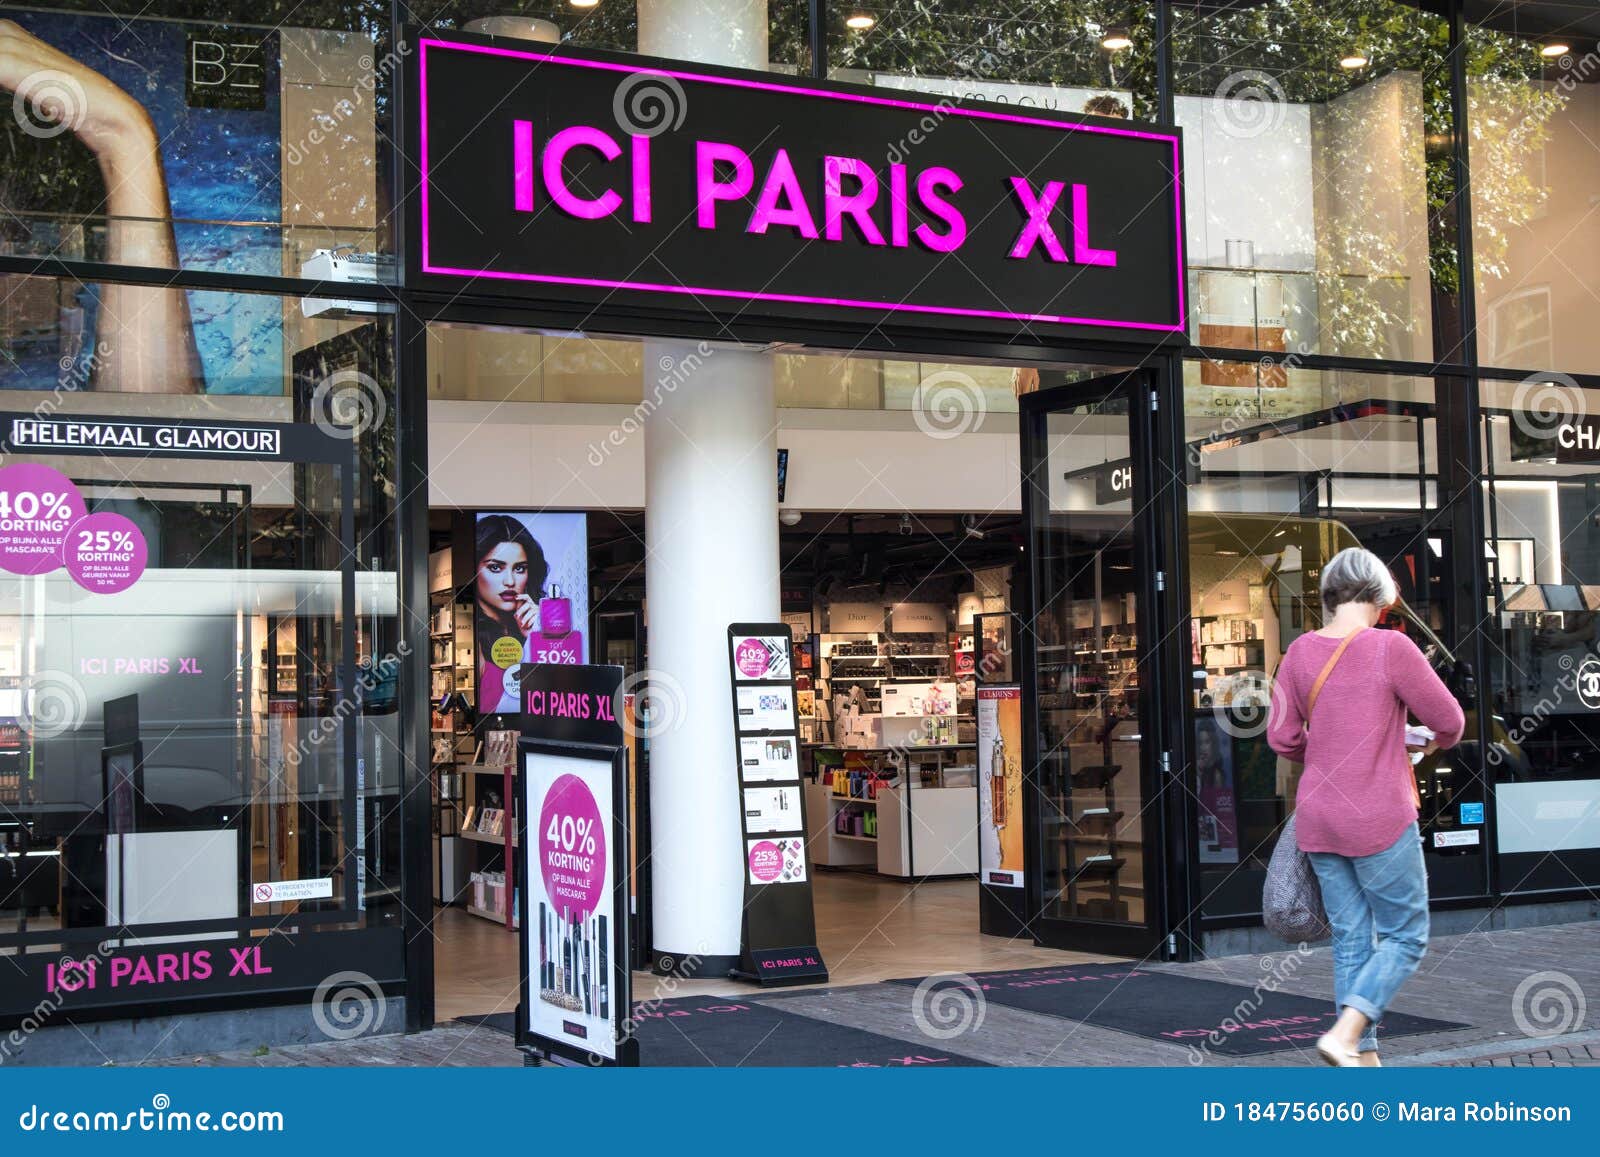 Migratie Hilarisch Afkorten ICI Paris XL Cosmetics Store Shop Editorial Image - Image of company,  makeup: 184756060